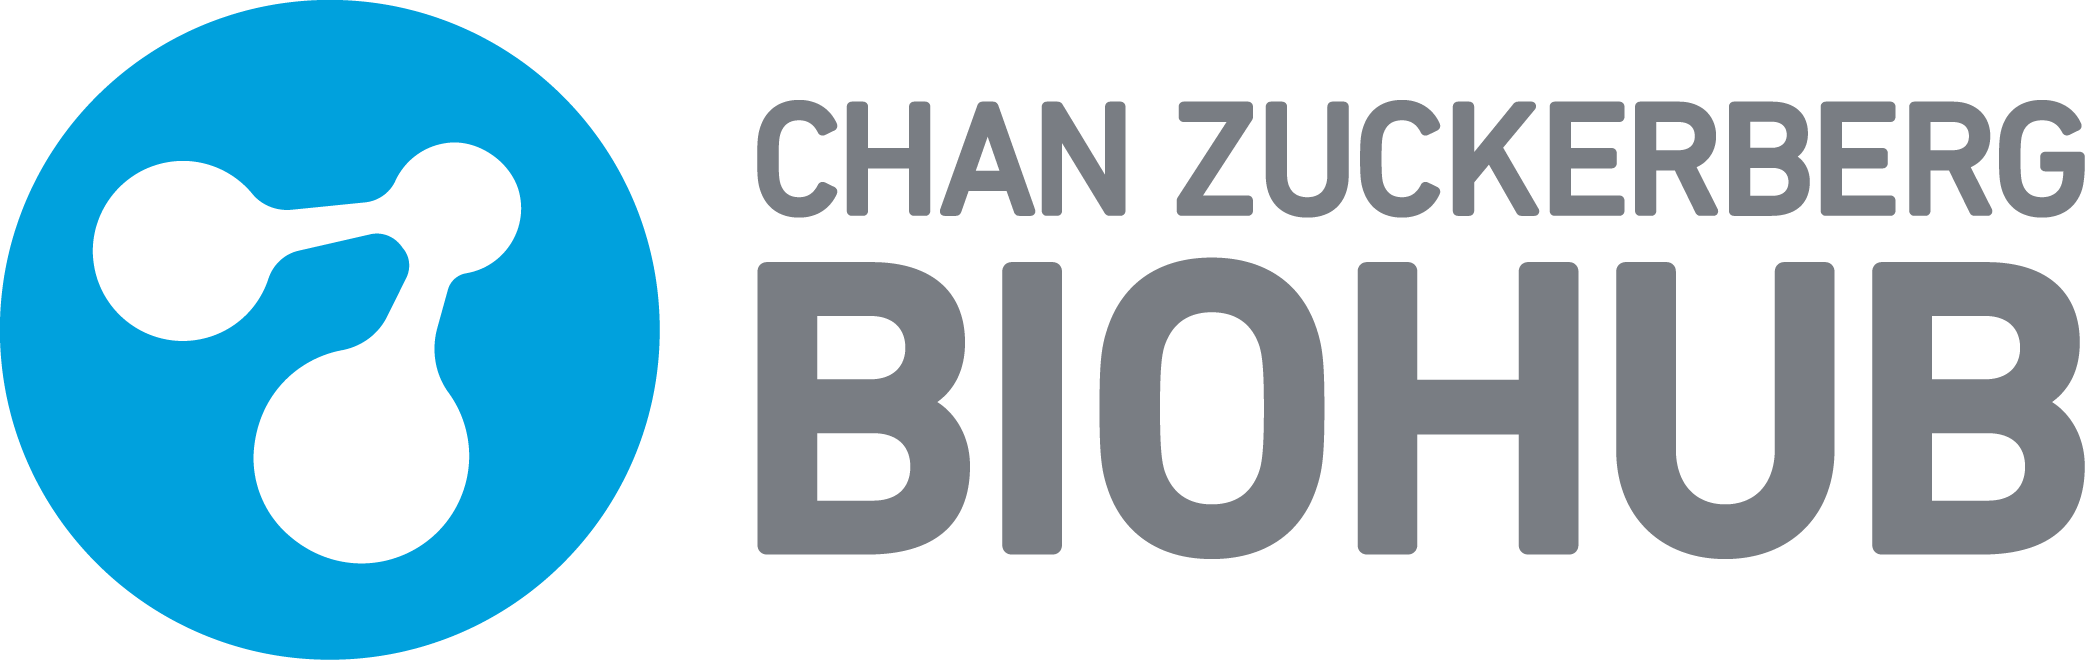 The Chan Zuckerberg Biohub